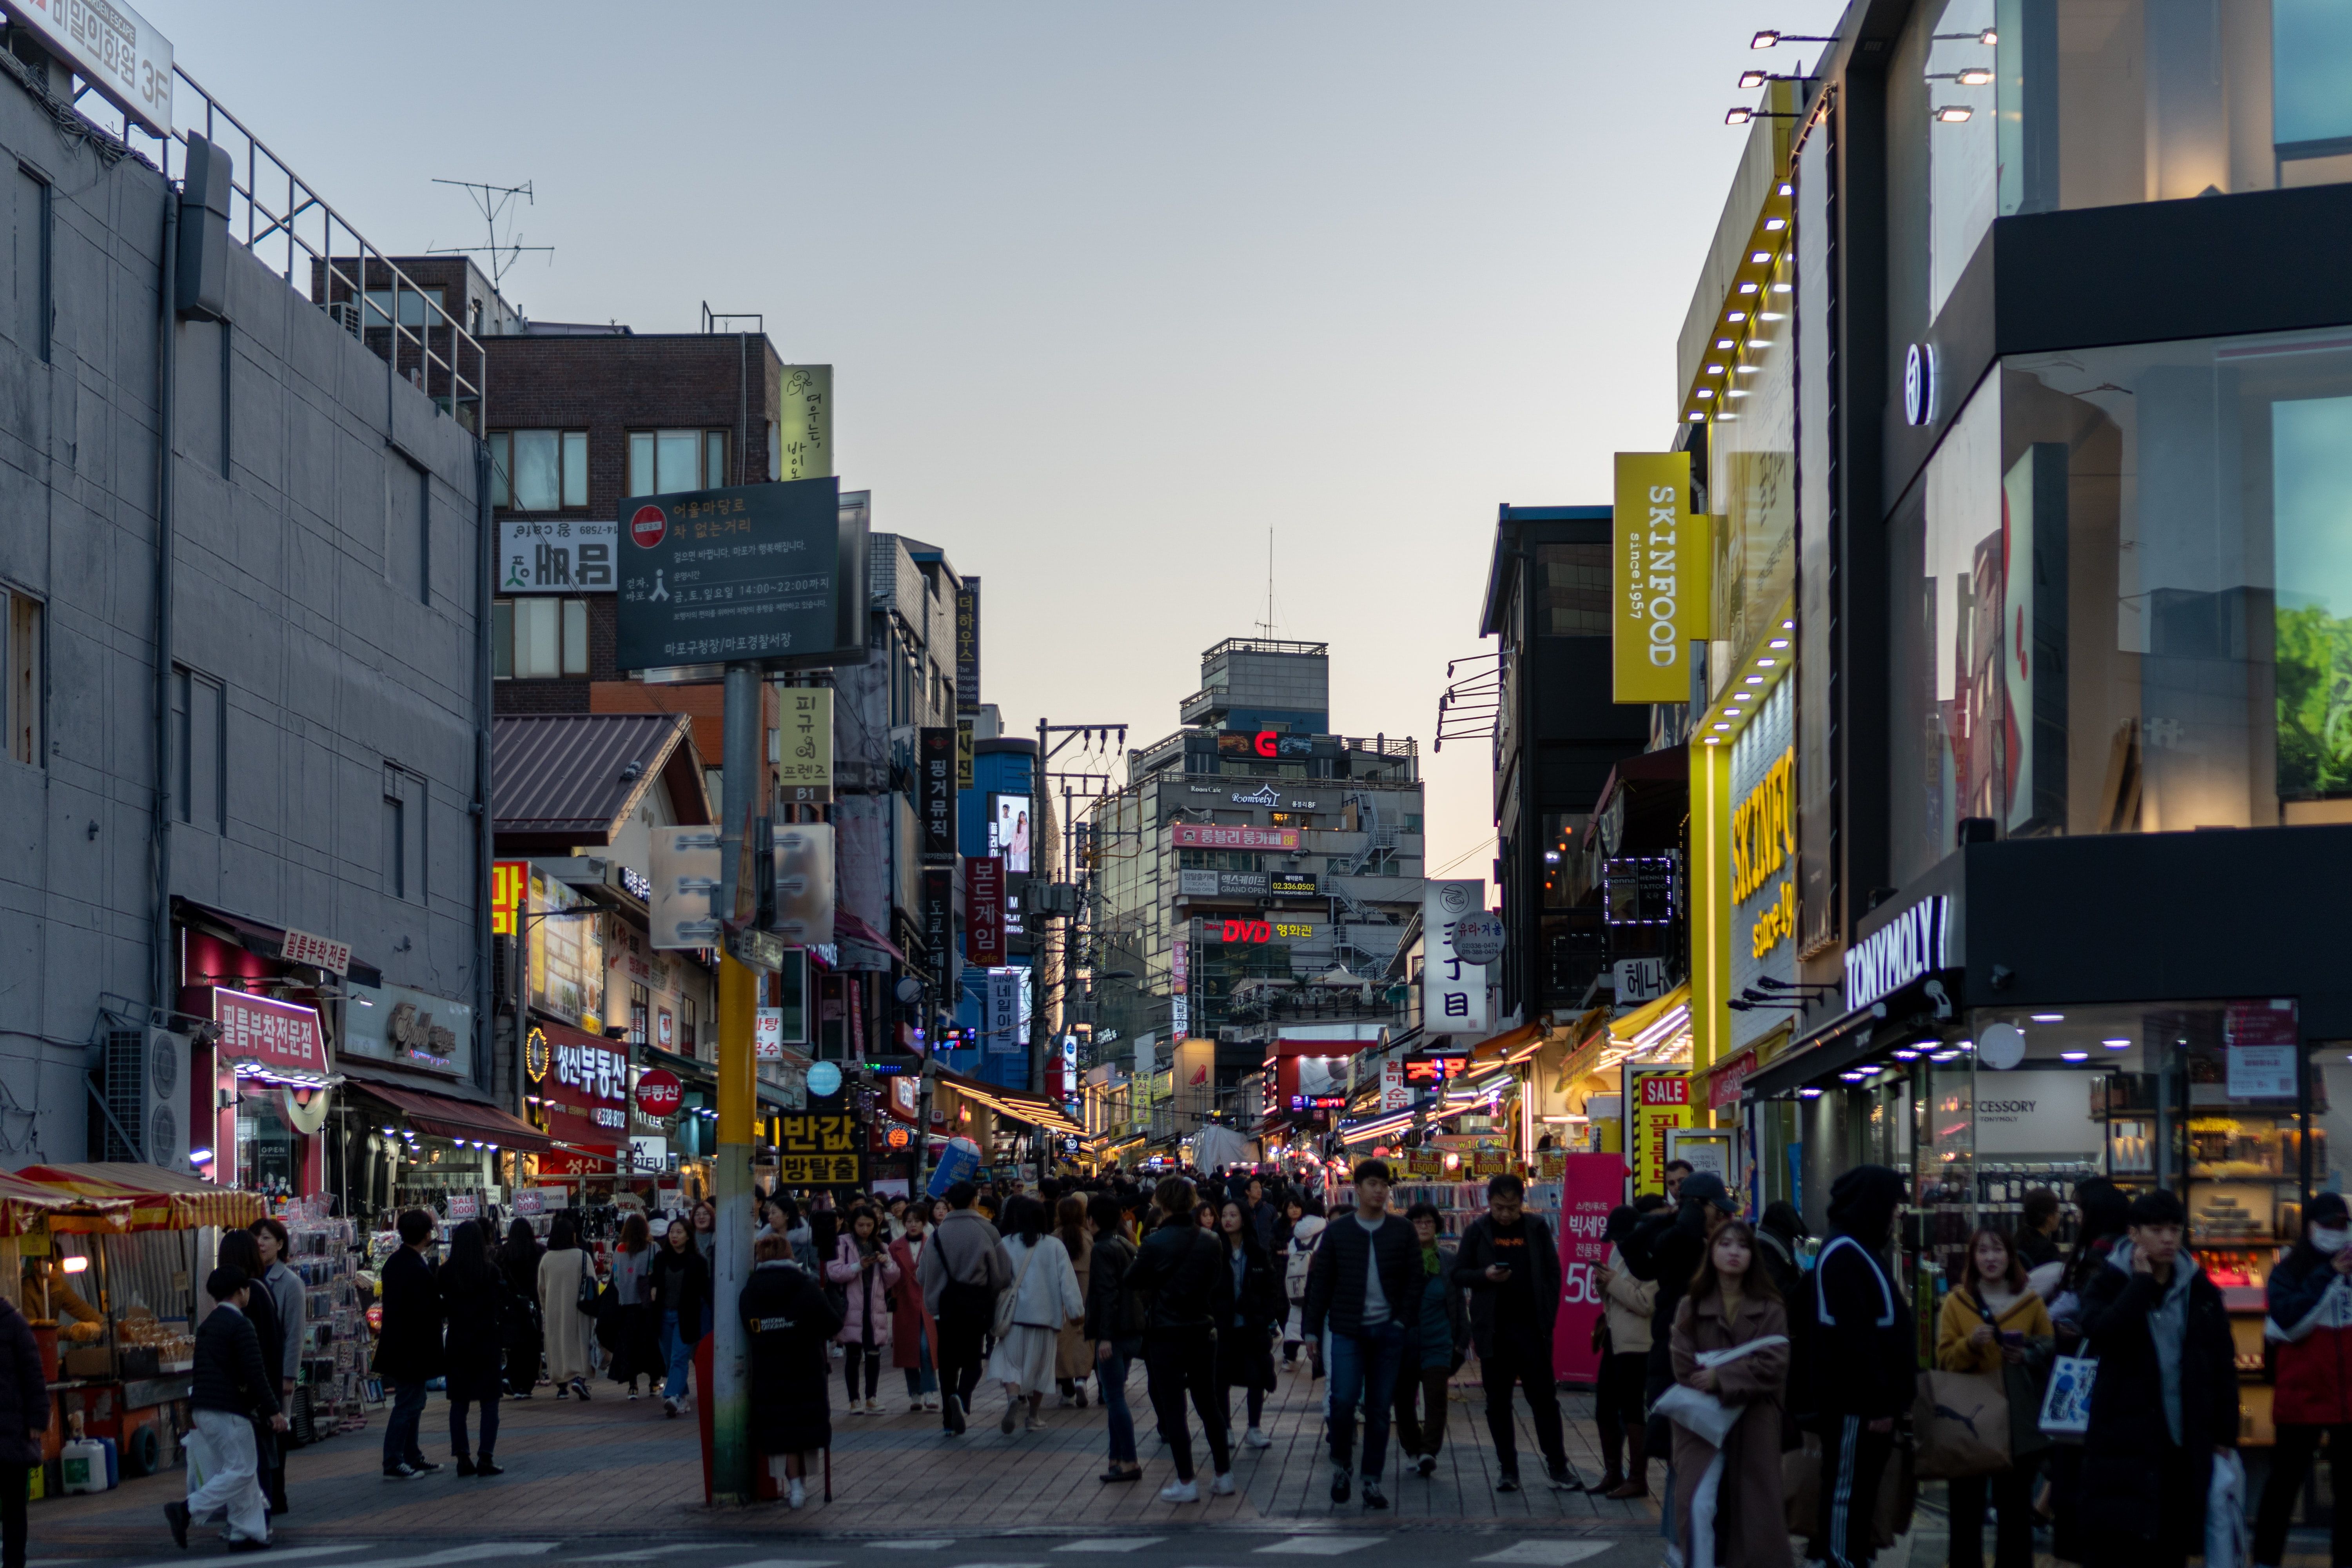 Street scene in Seoul, South Korea